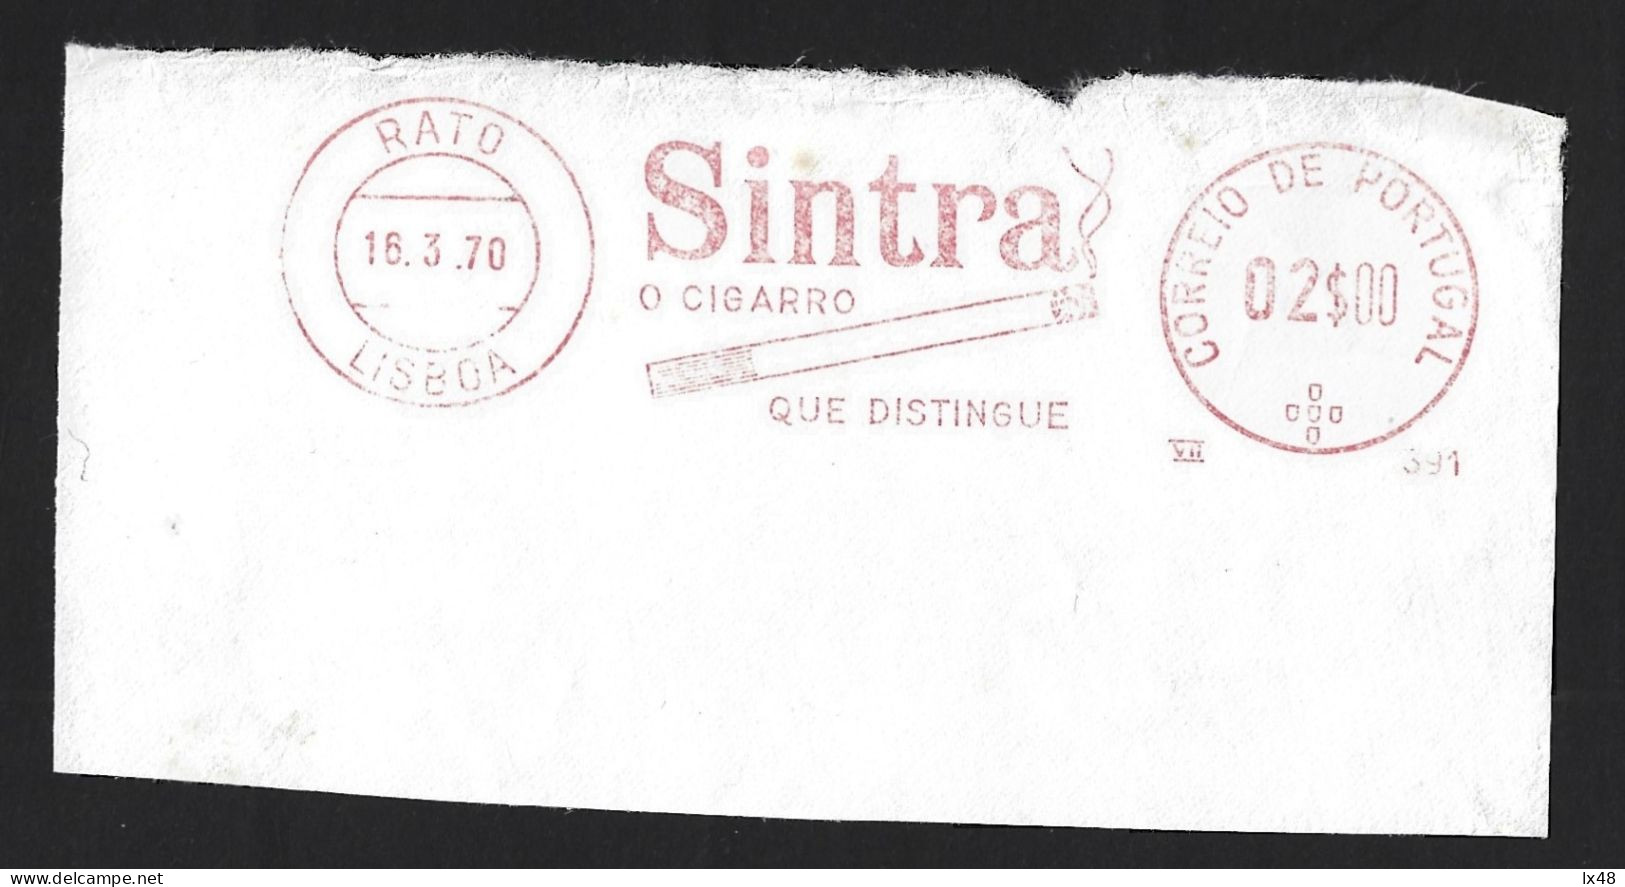 'Sintra' Brand Tobacco Cigarette. Banner On Sintra Tobacco, In 1970. The Cigarette That Distinguishes. Cigarro Sintra - Tabac & Cigarettes